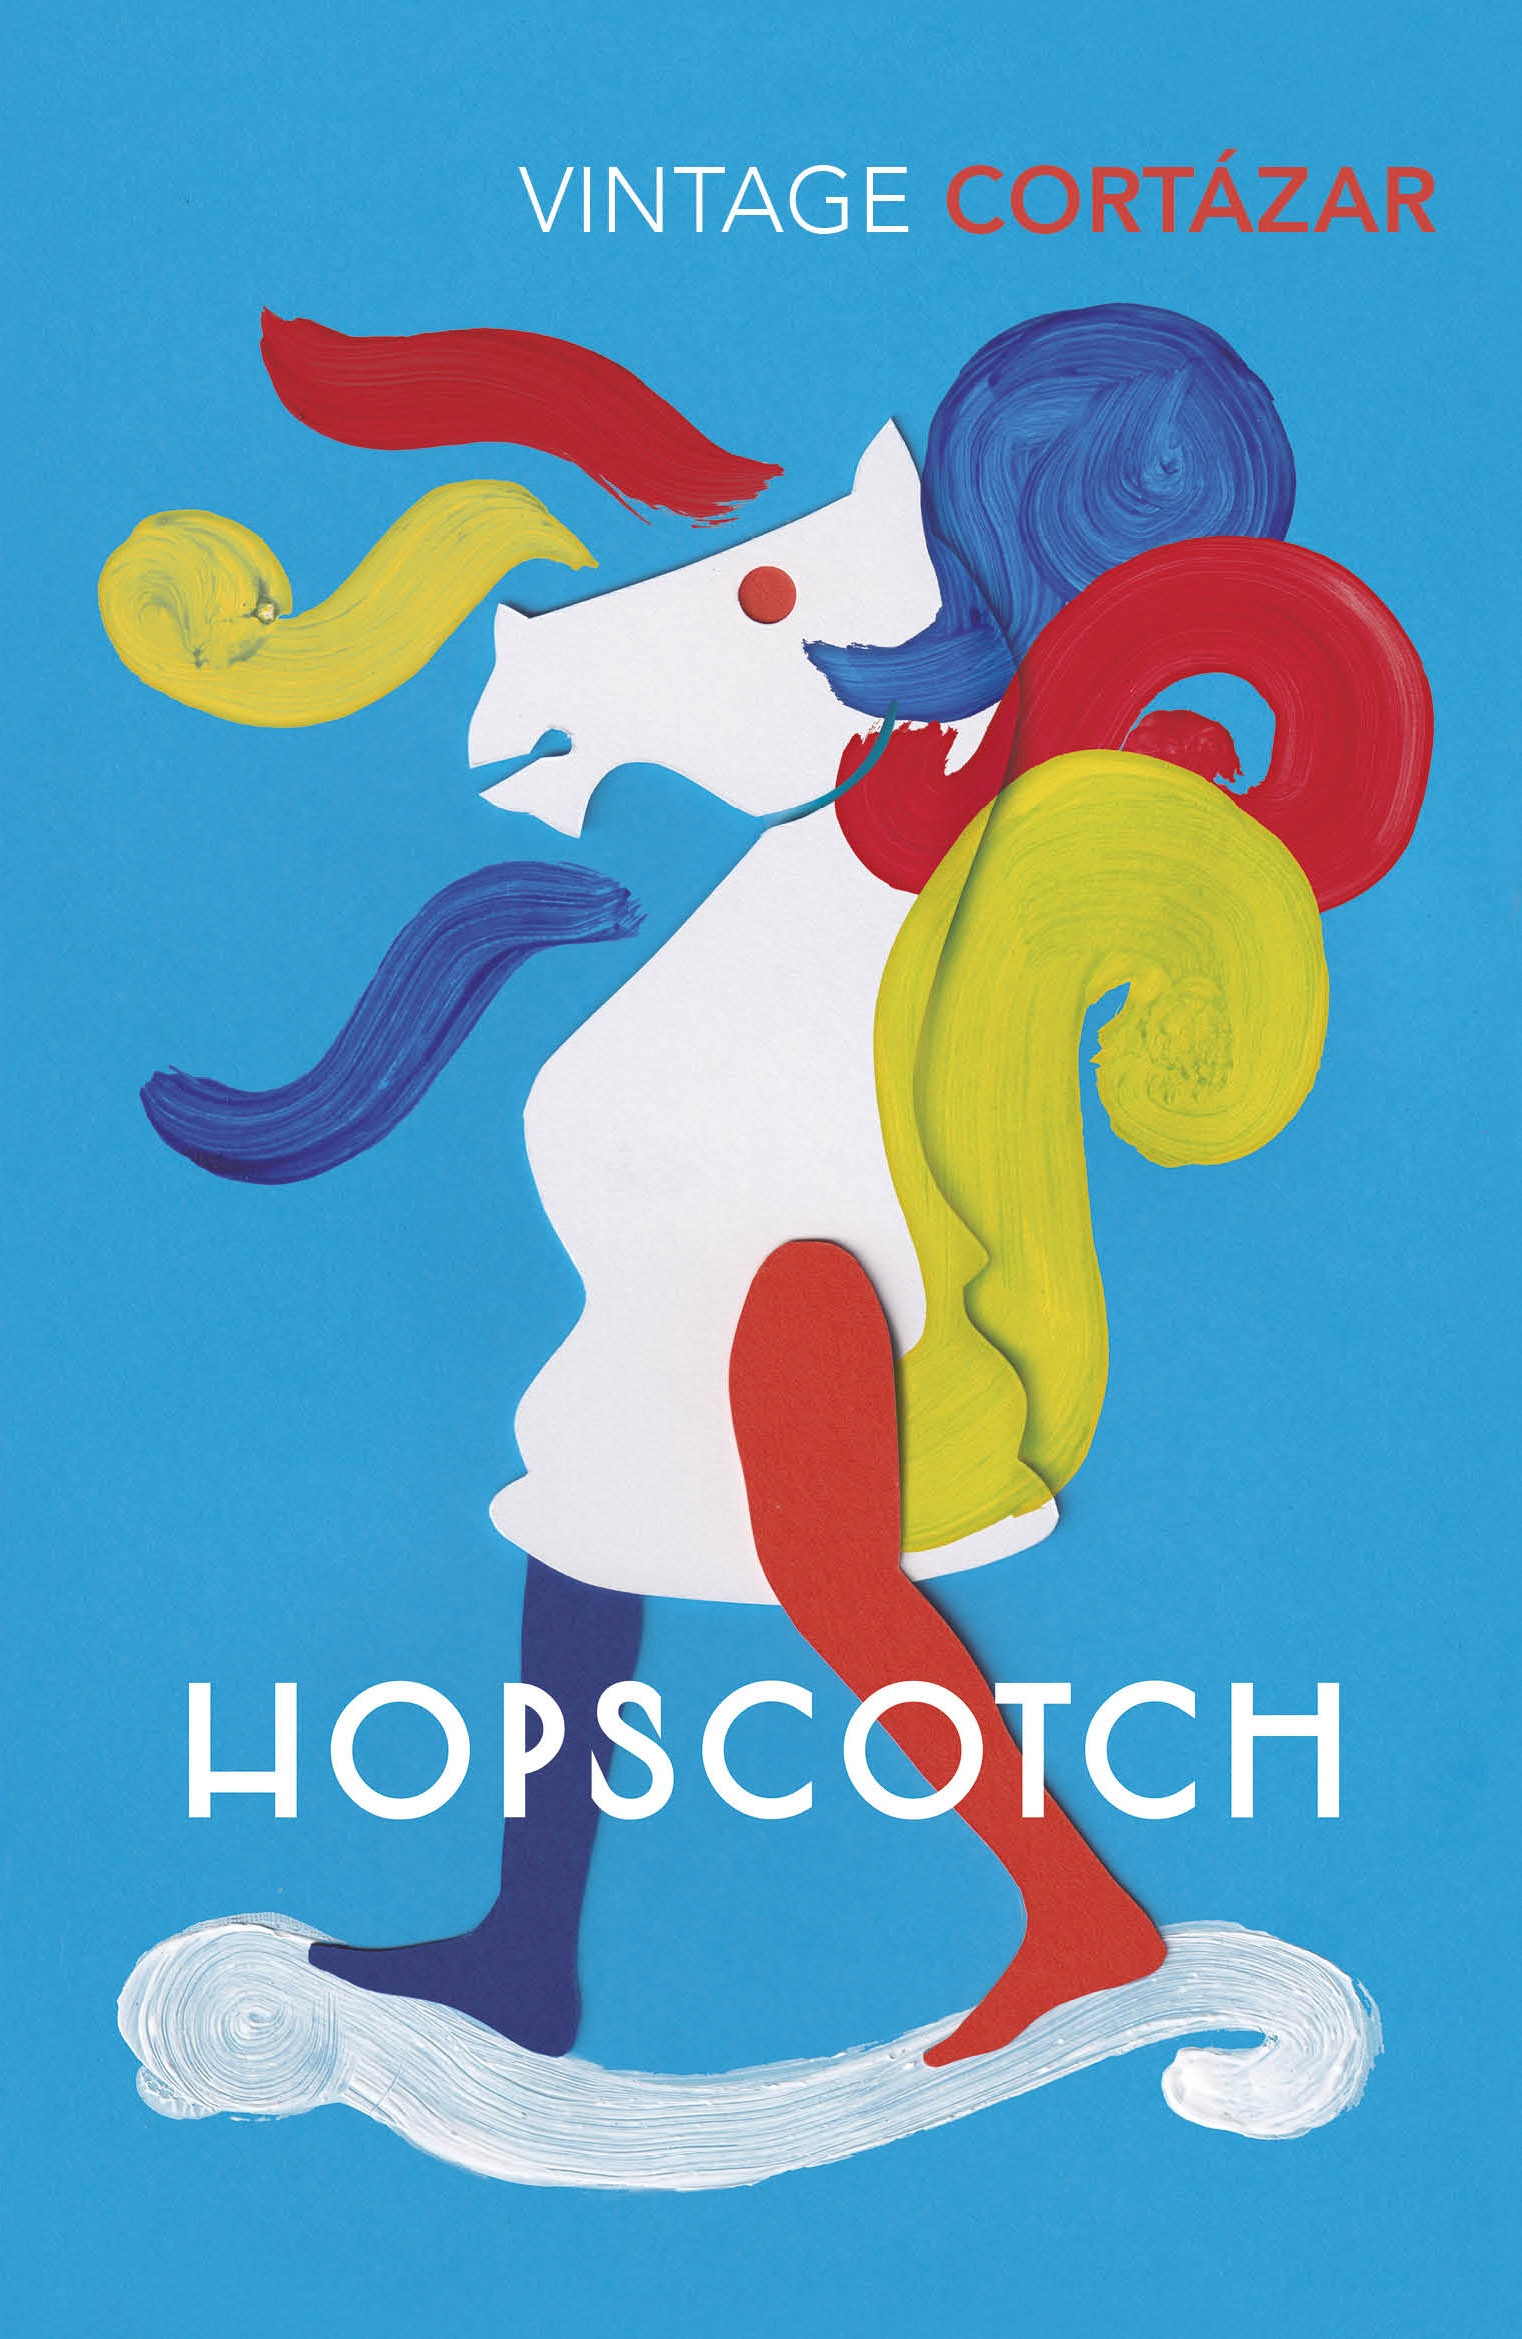 Book “Hopscotch” by Julio Cortazar — February 6, 2020